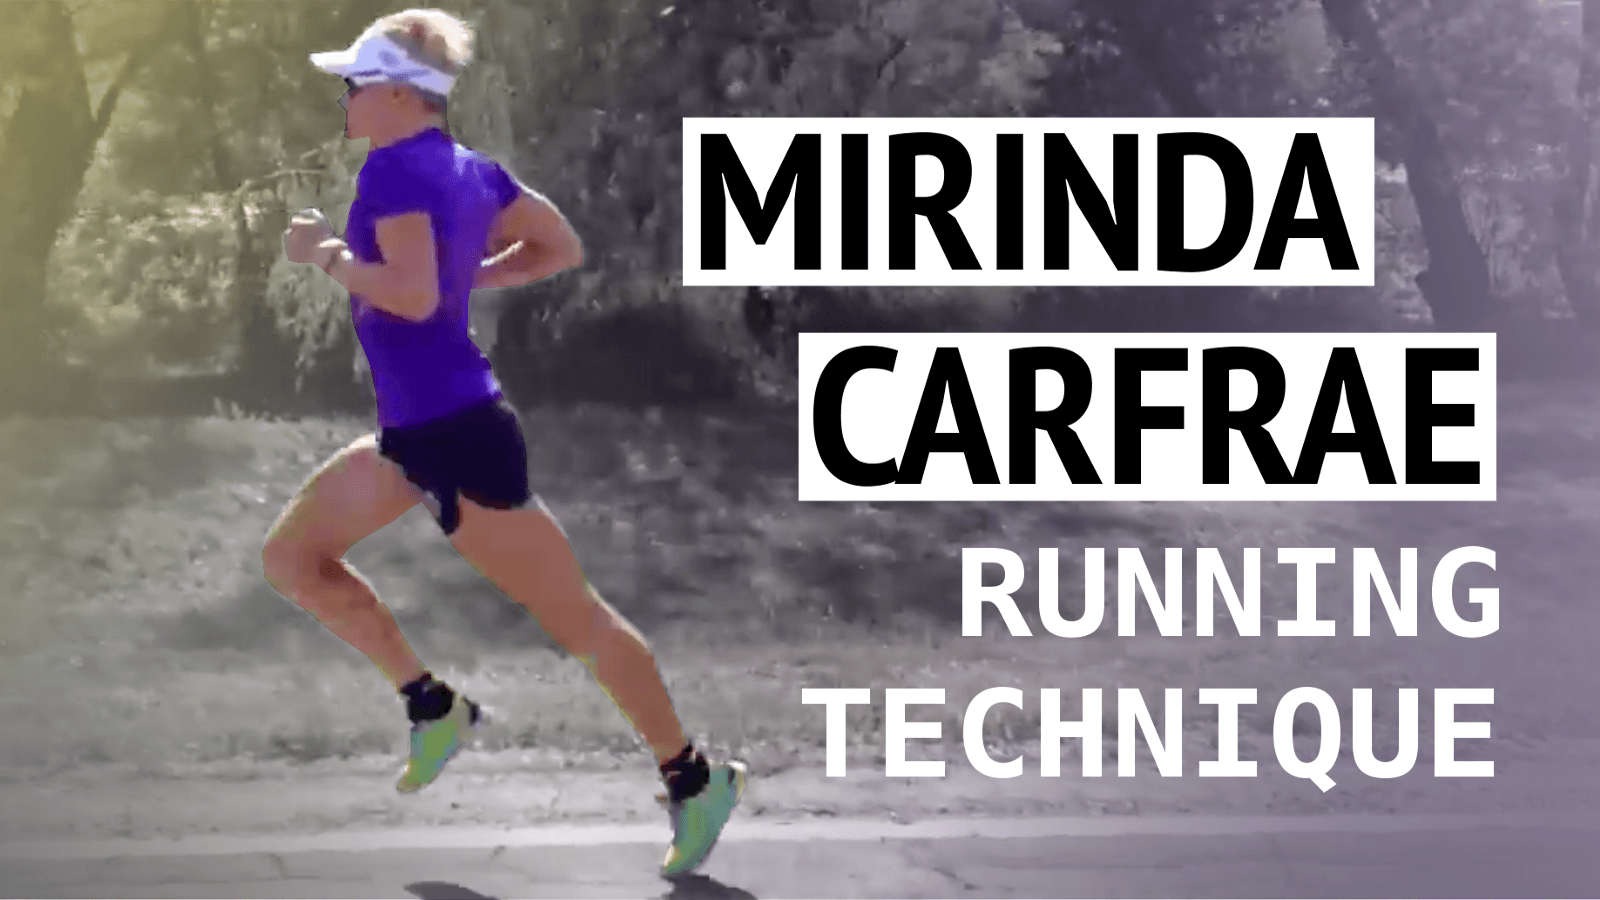 Running faster перевод. Mirinda Carfrae. Бег в стиле слоу моушен. Running technique. Изобрази бег в стиле слоу моушен.